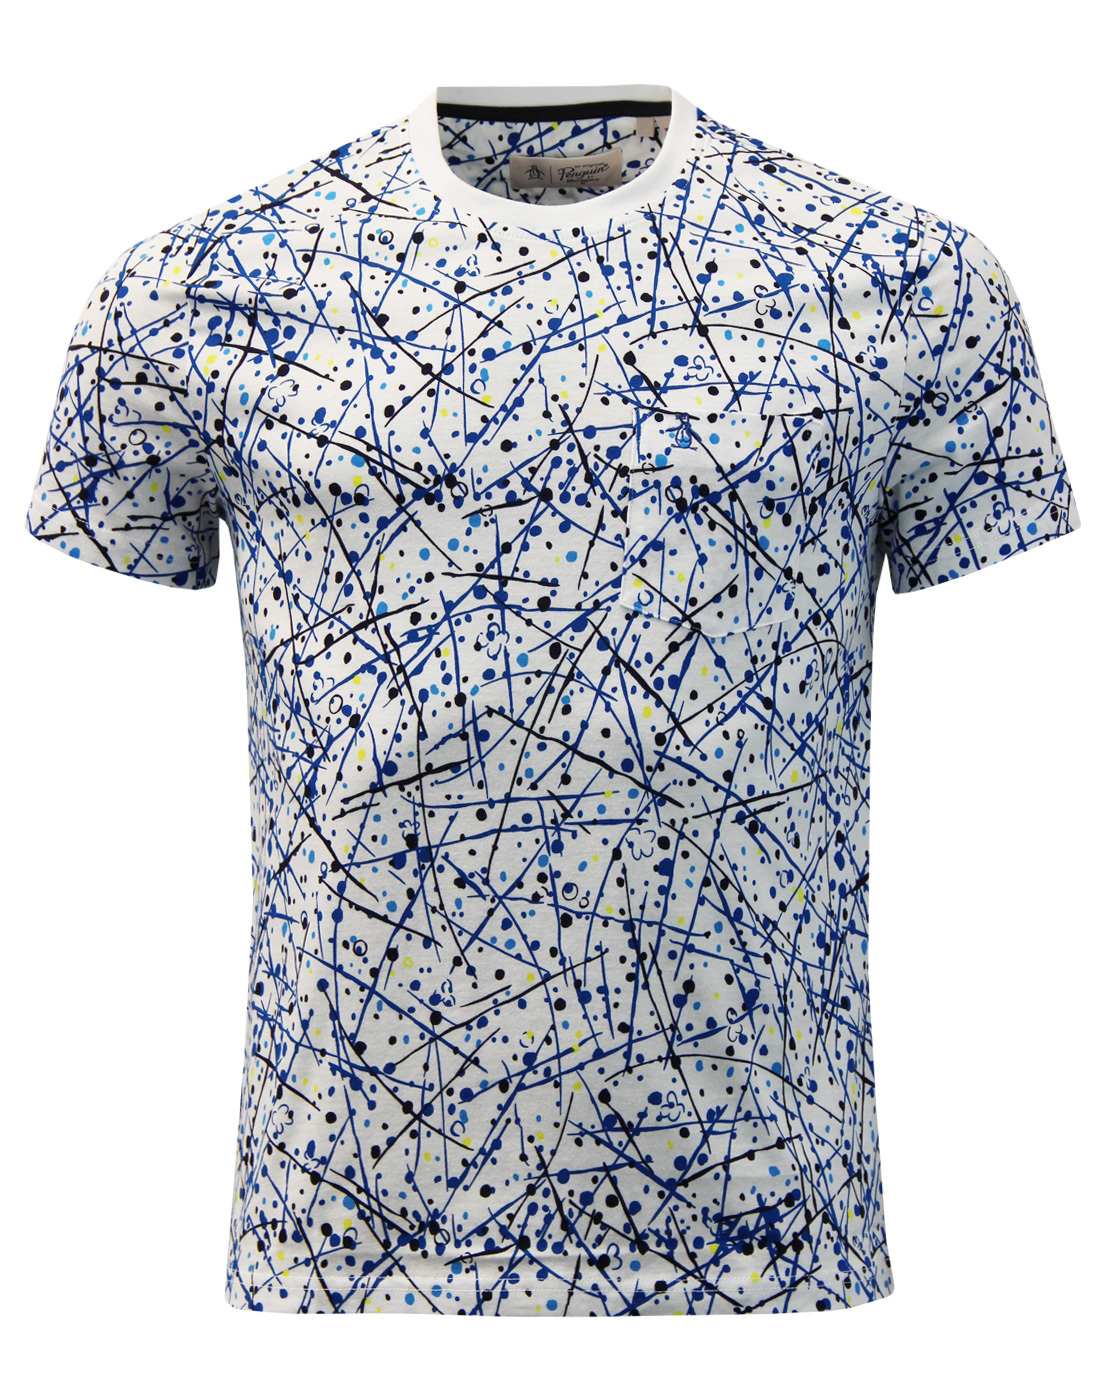 ORIGINAL PENGUIN Men's Retro Indie Paint Splatter Print T-Shirt